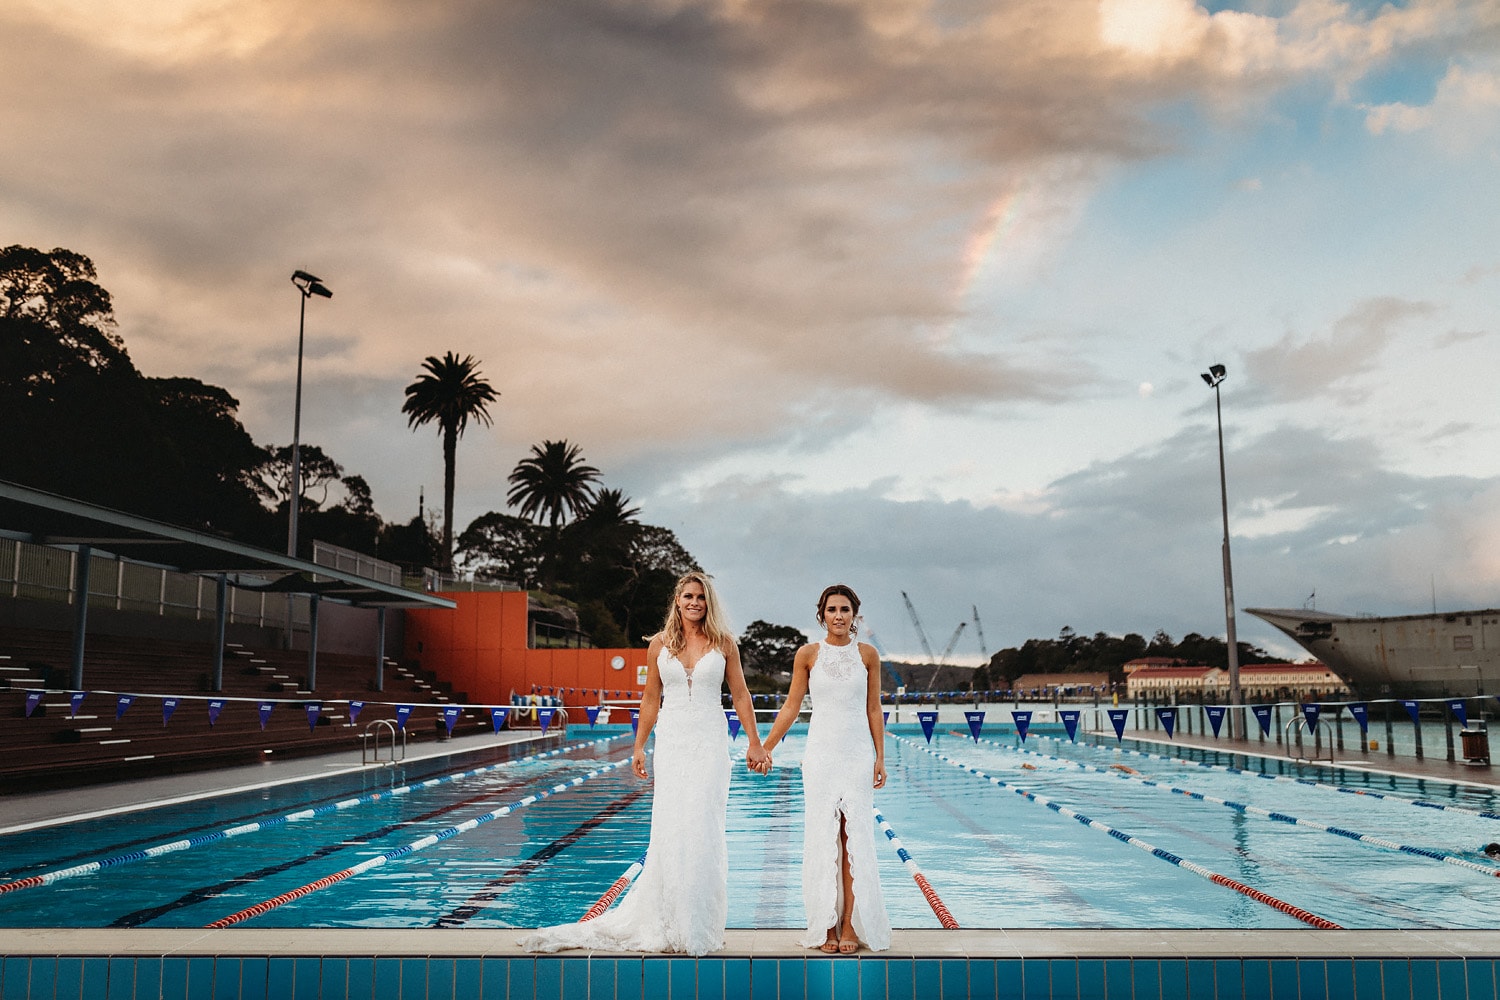 Sydney-wedding-photographer-poolside-cafe-pool